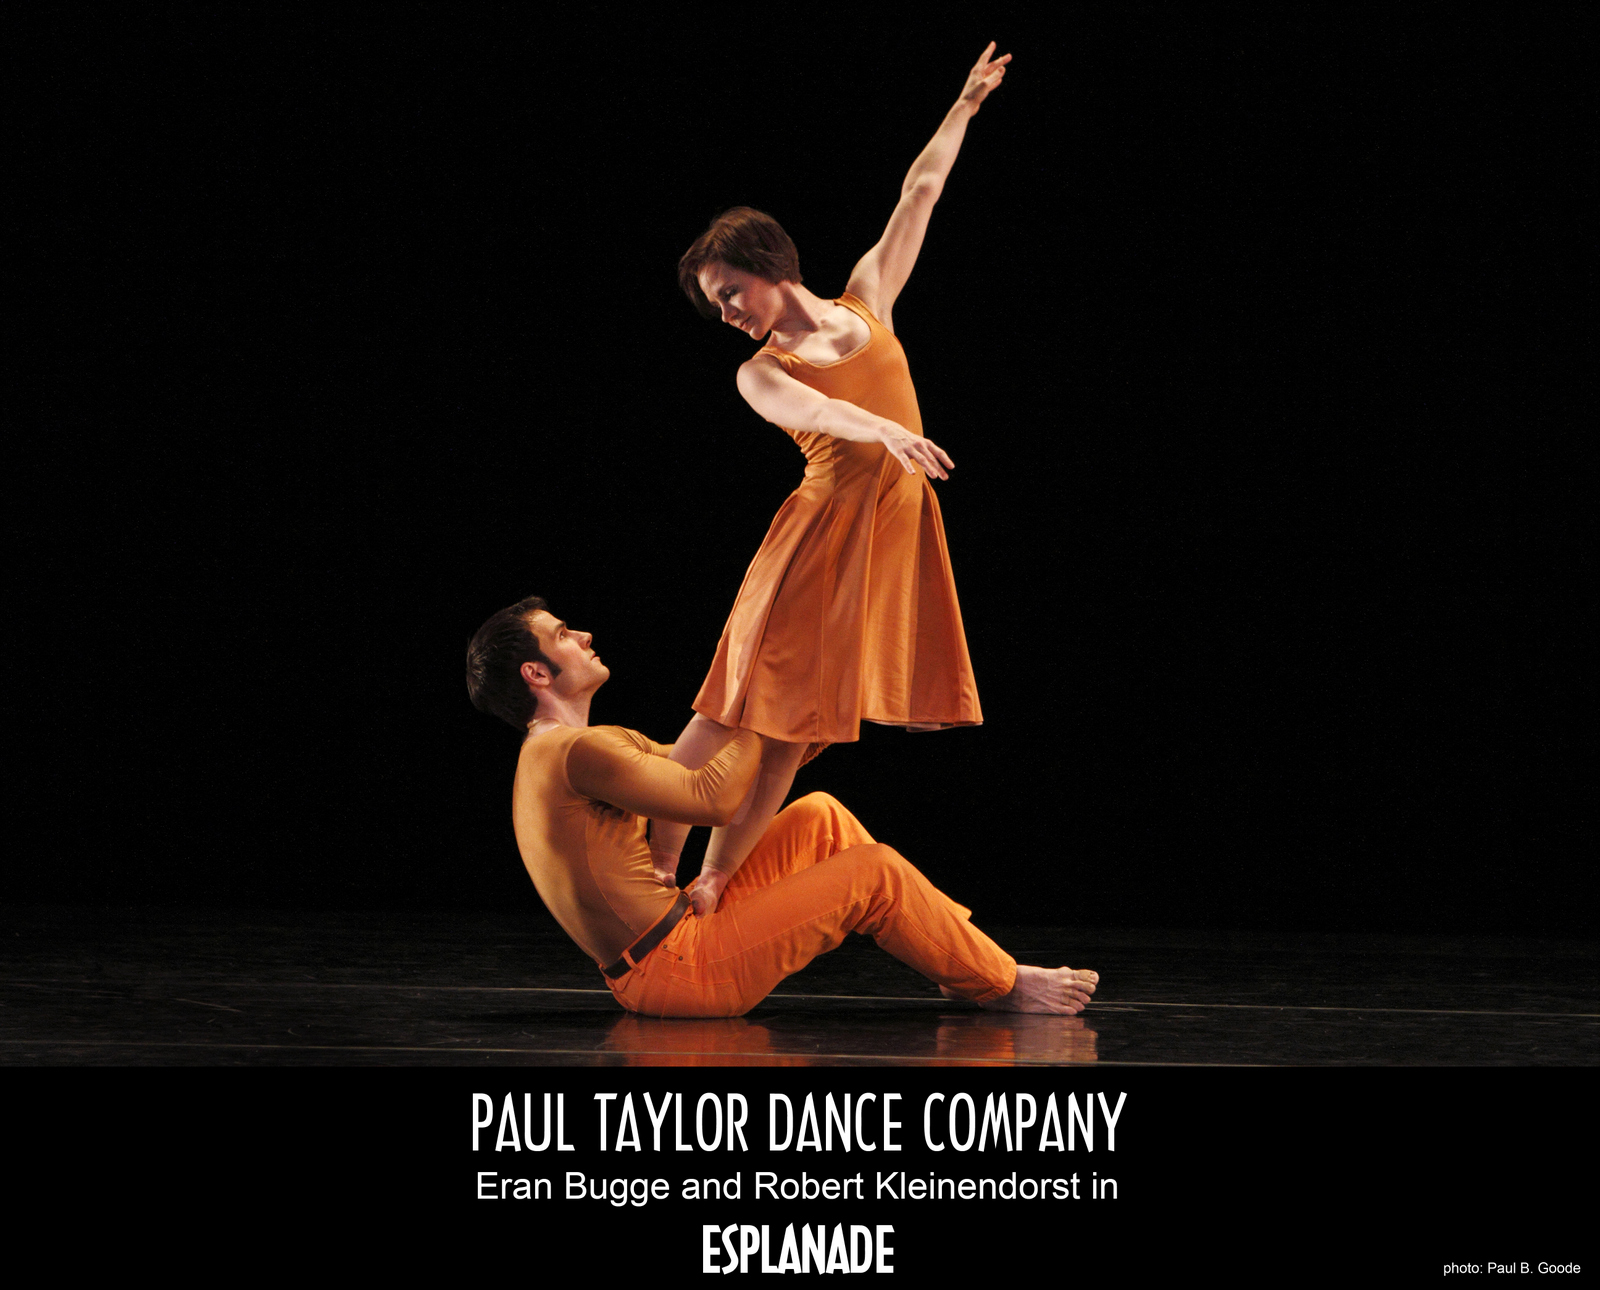 Esplanade. Paul Taylor Dance Company. Photo credit: Paul B. Goode.